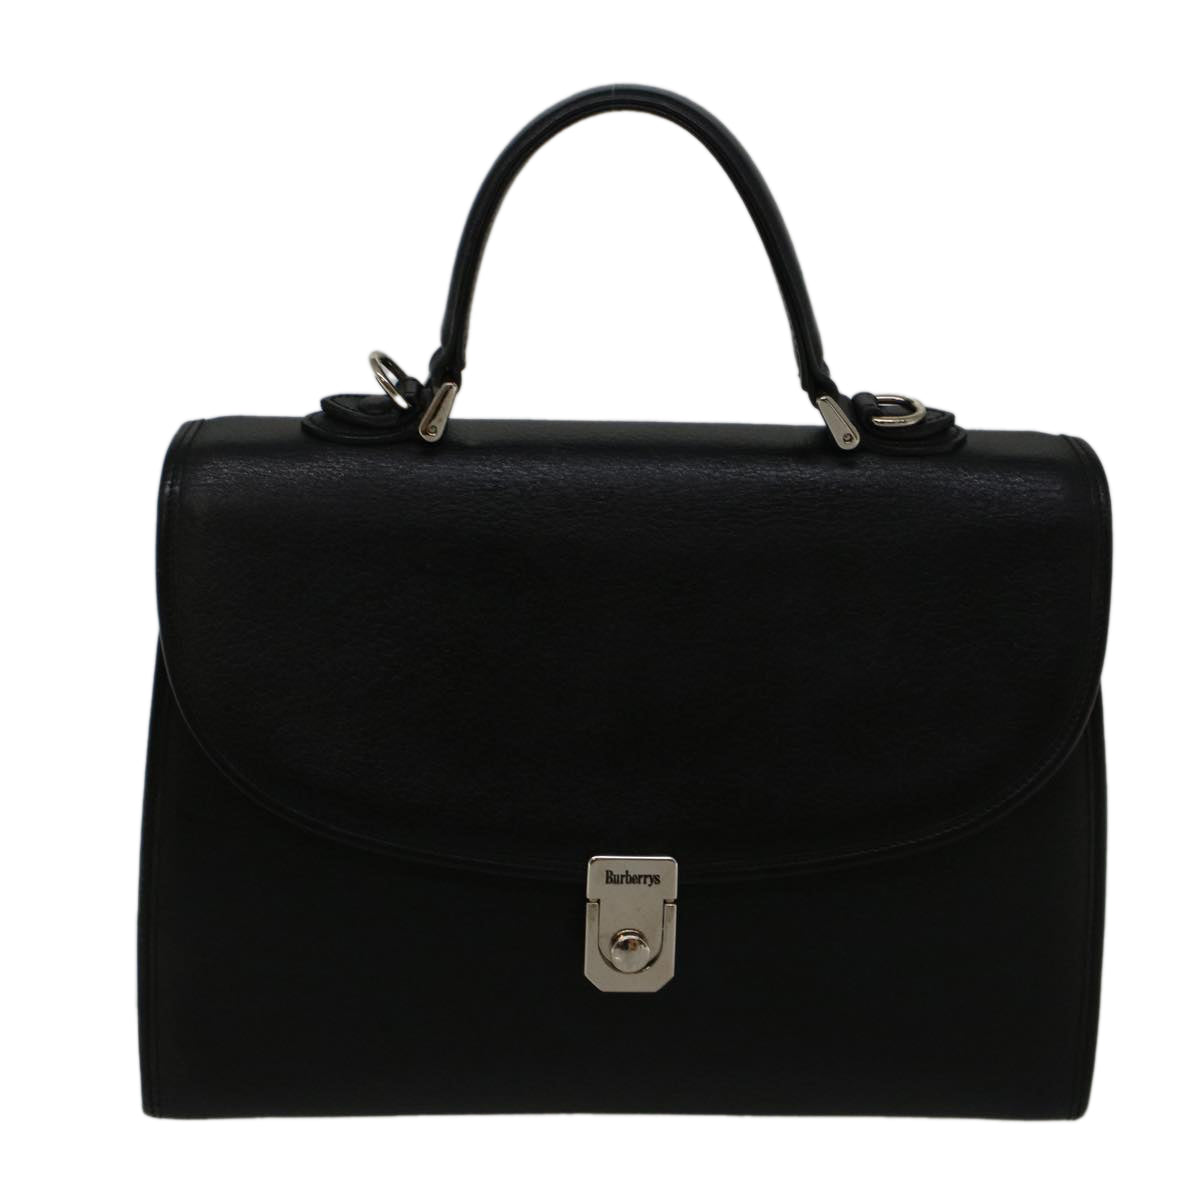 Burberrys Hand Bag Leather Black Auth am5156 - 0